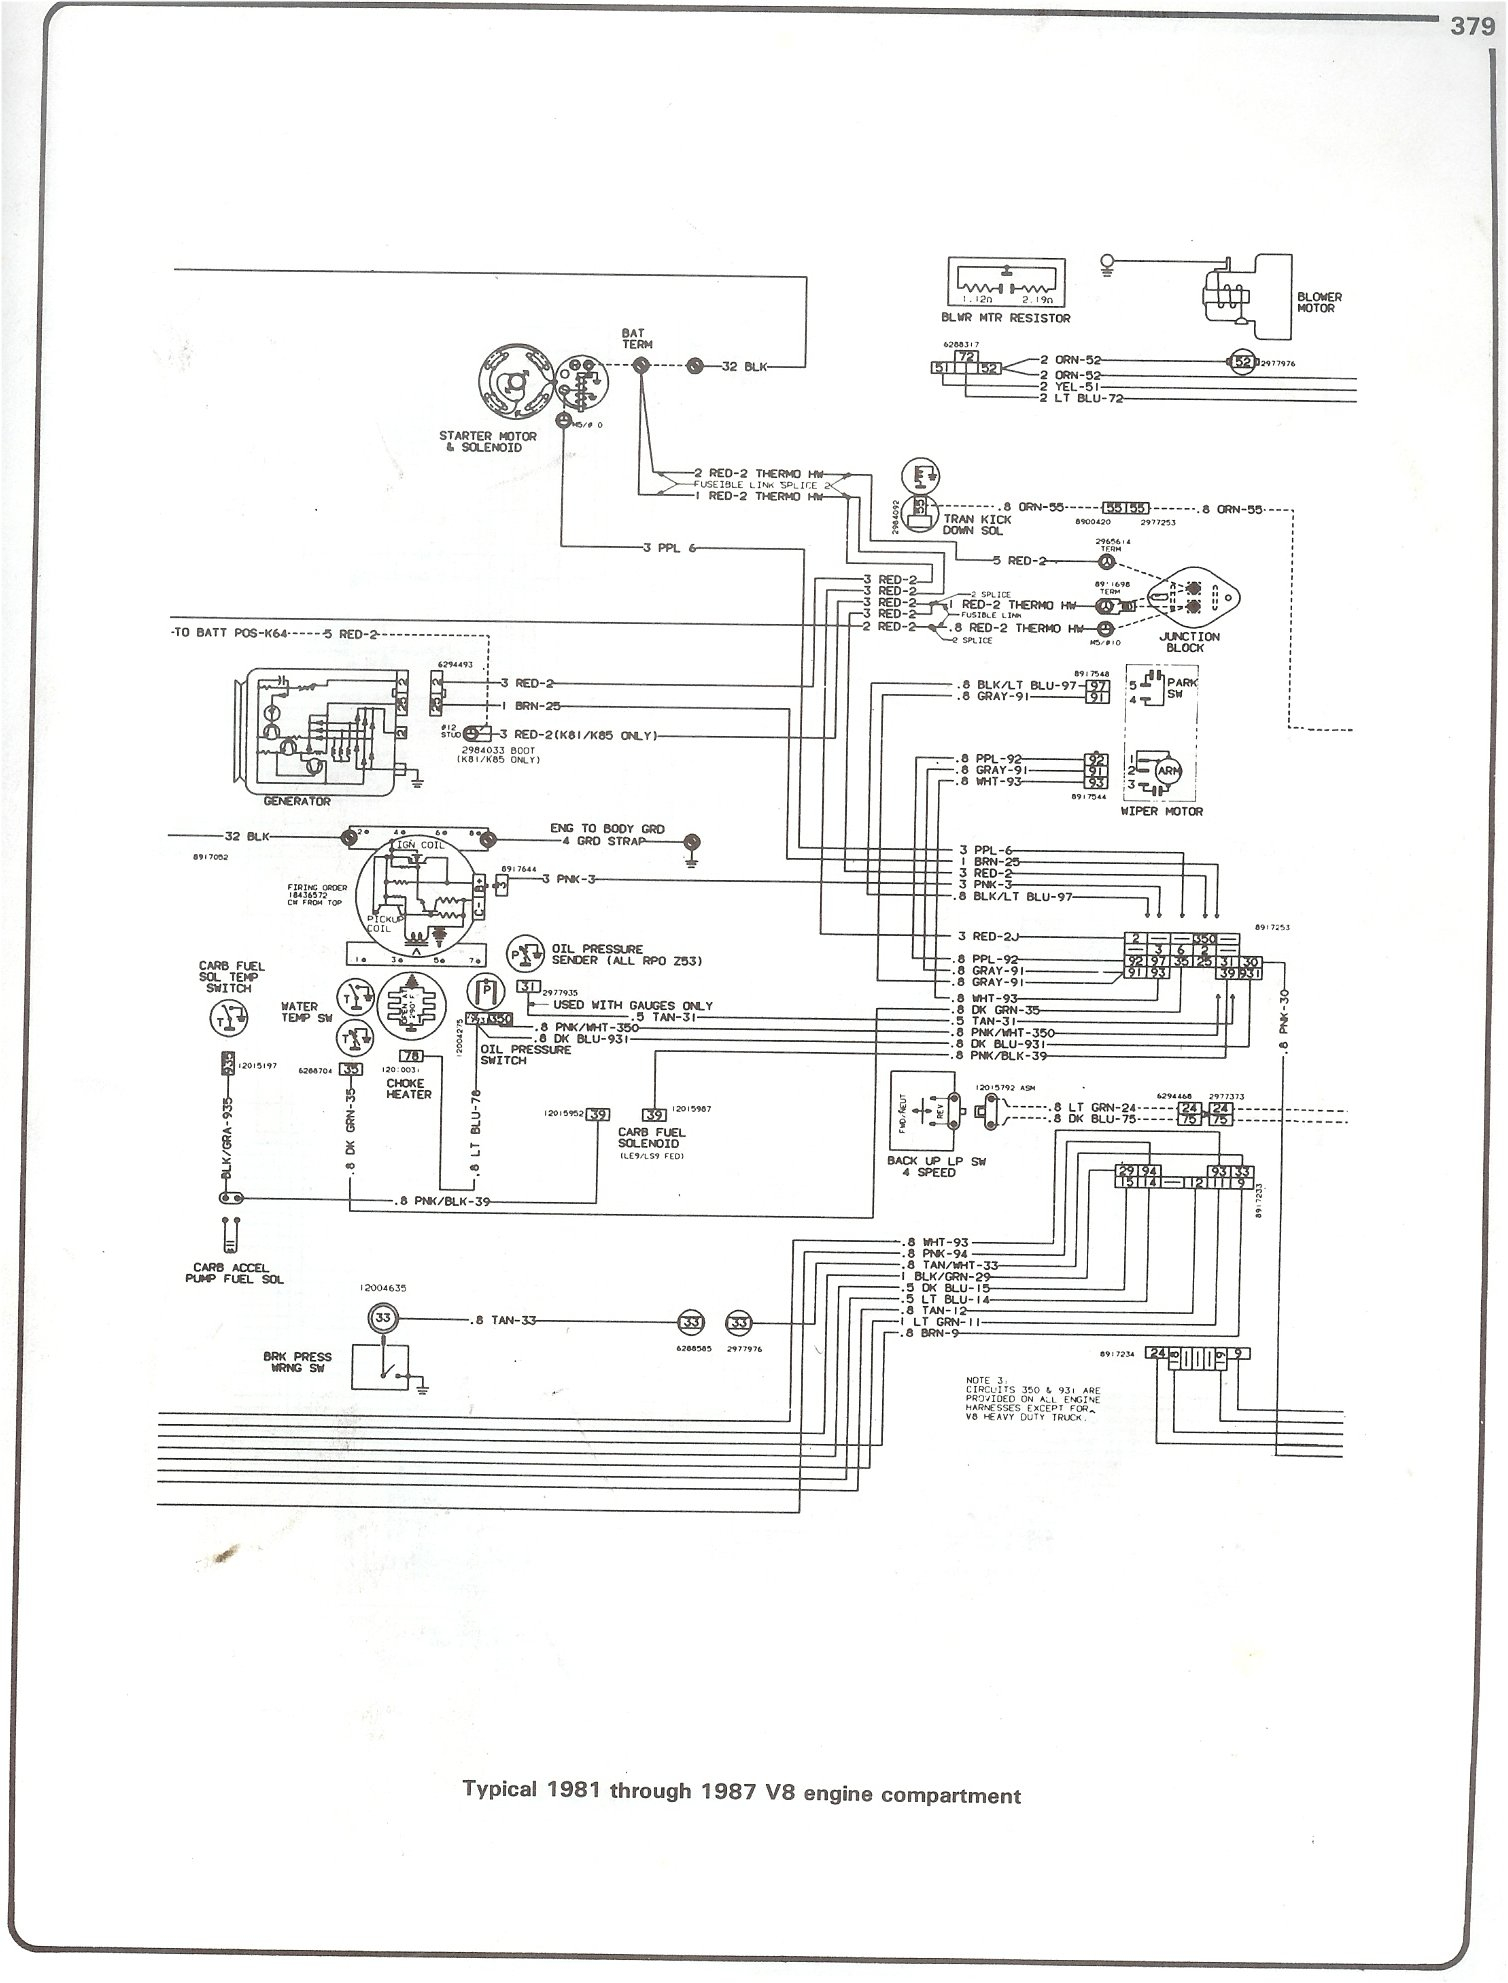 7.3 Powerstroke Fuel Line Diagram 97 73 Fuel System Diagram Preview Wiring Diagram